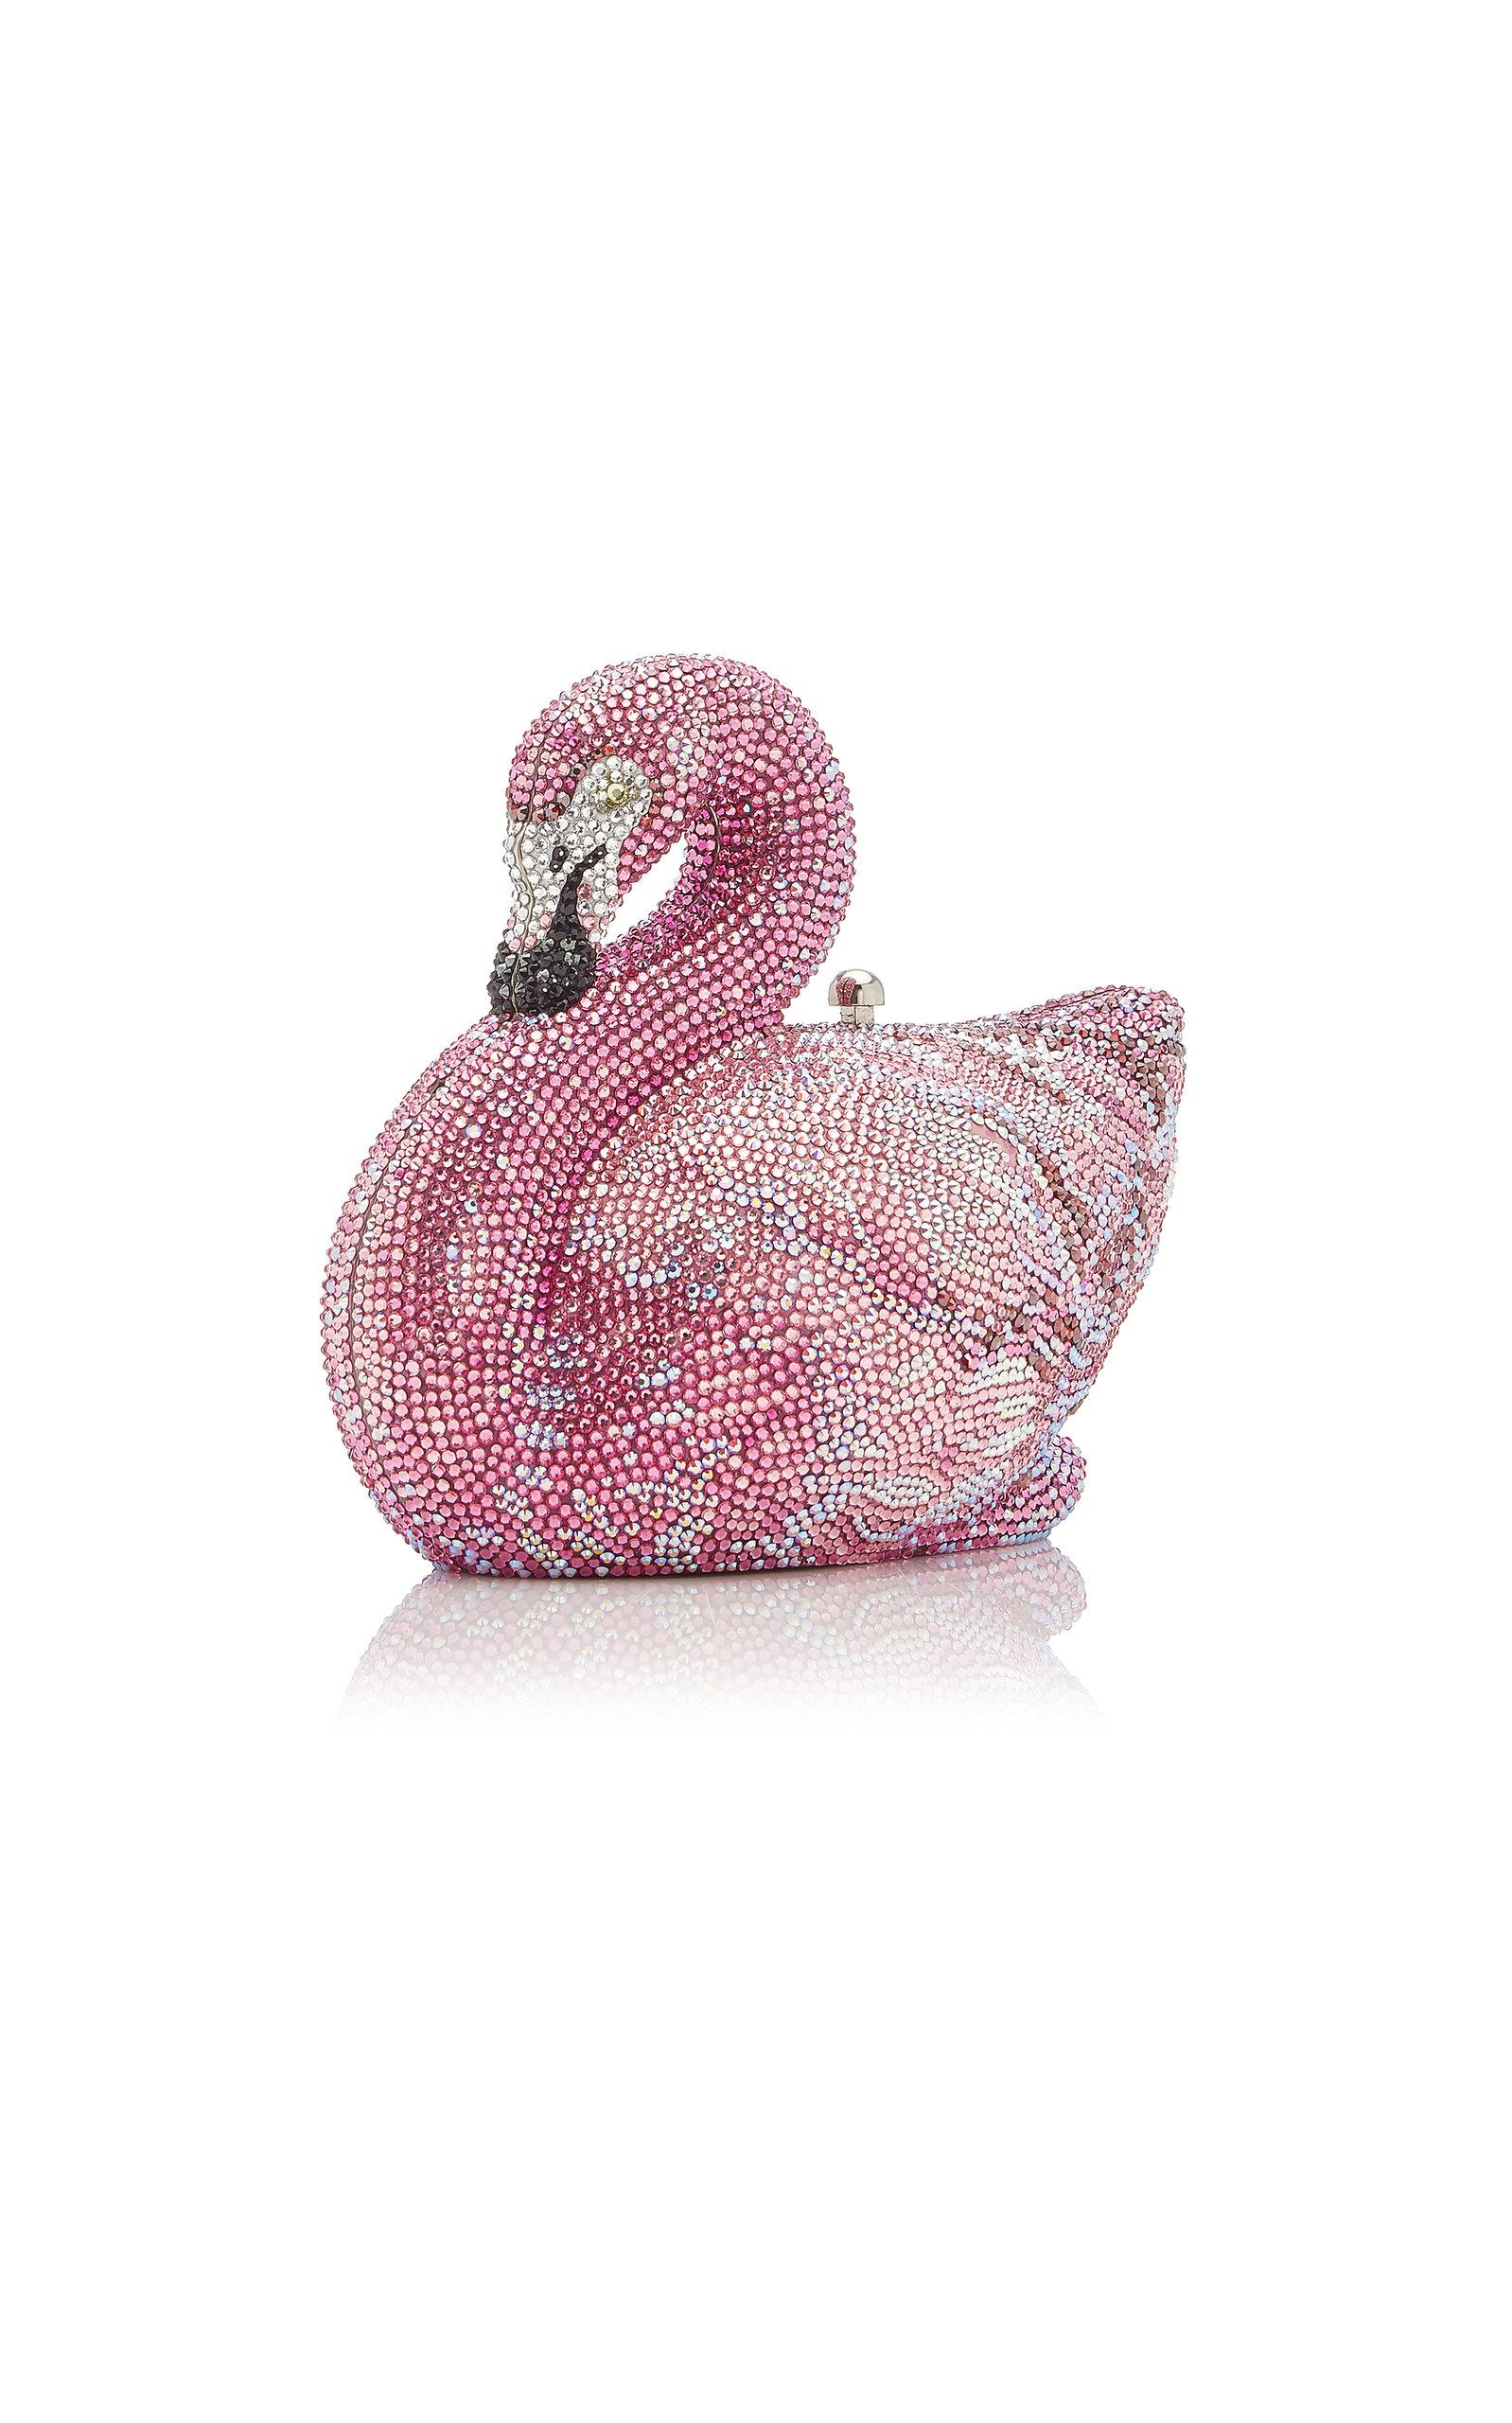 Judith Leiber Flamingo Clutch in Pink